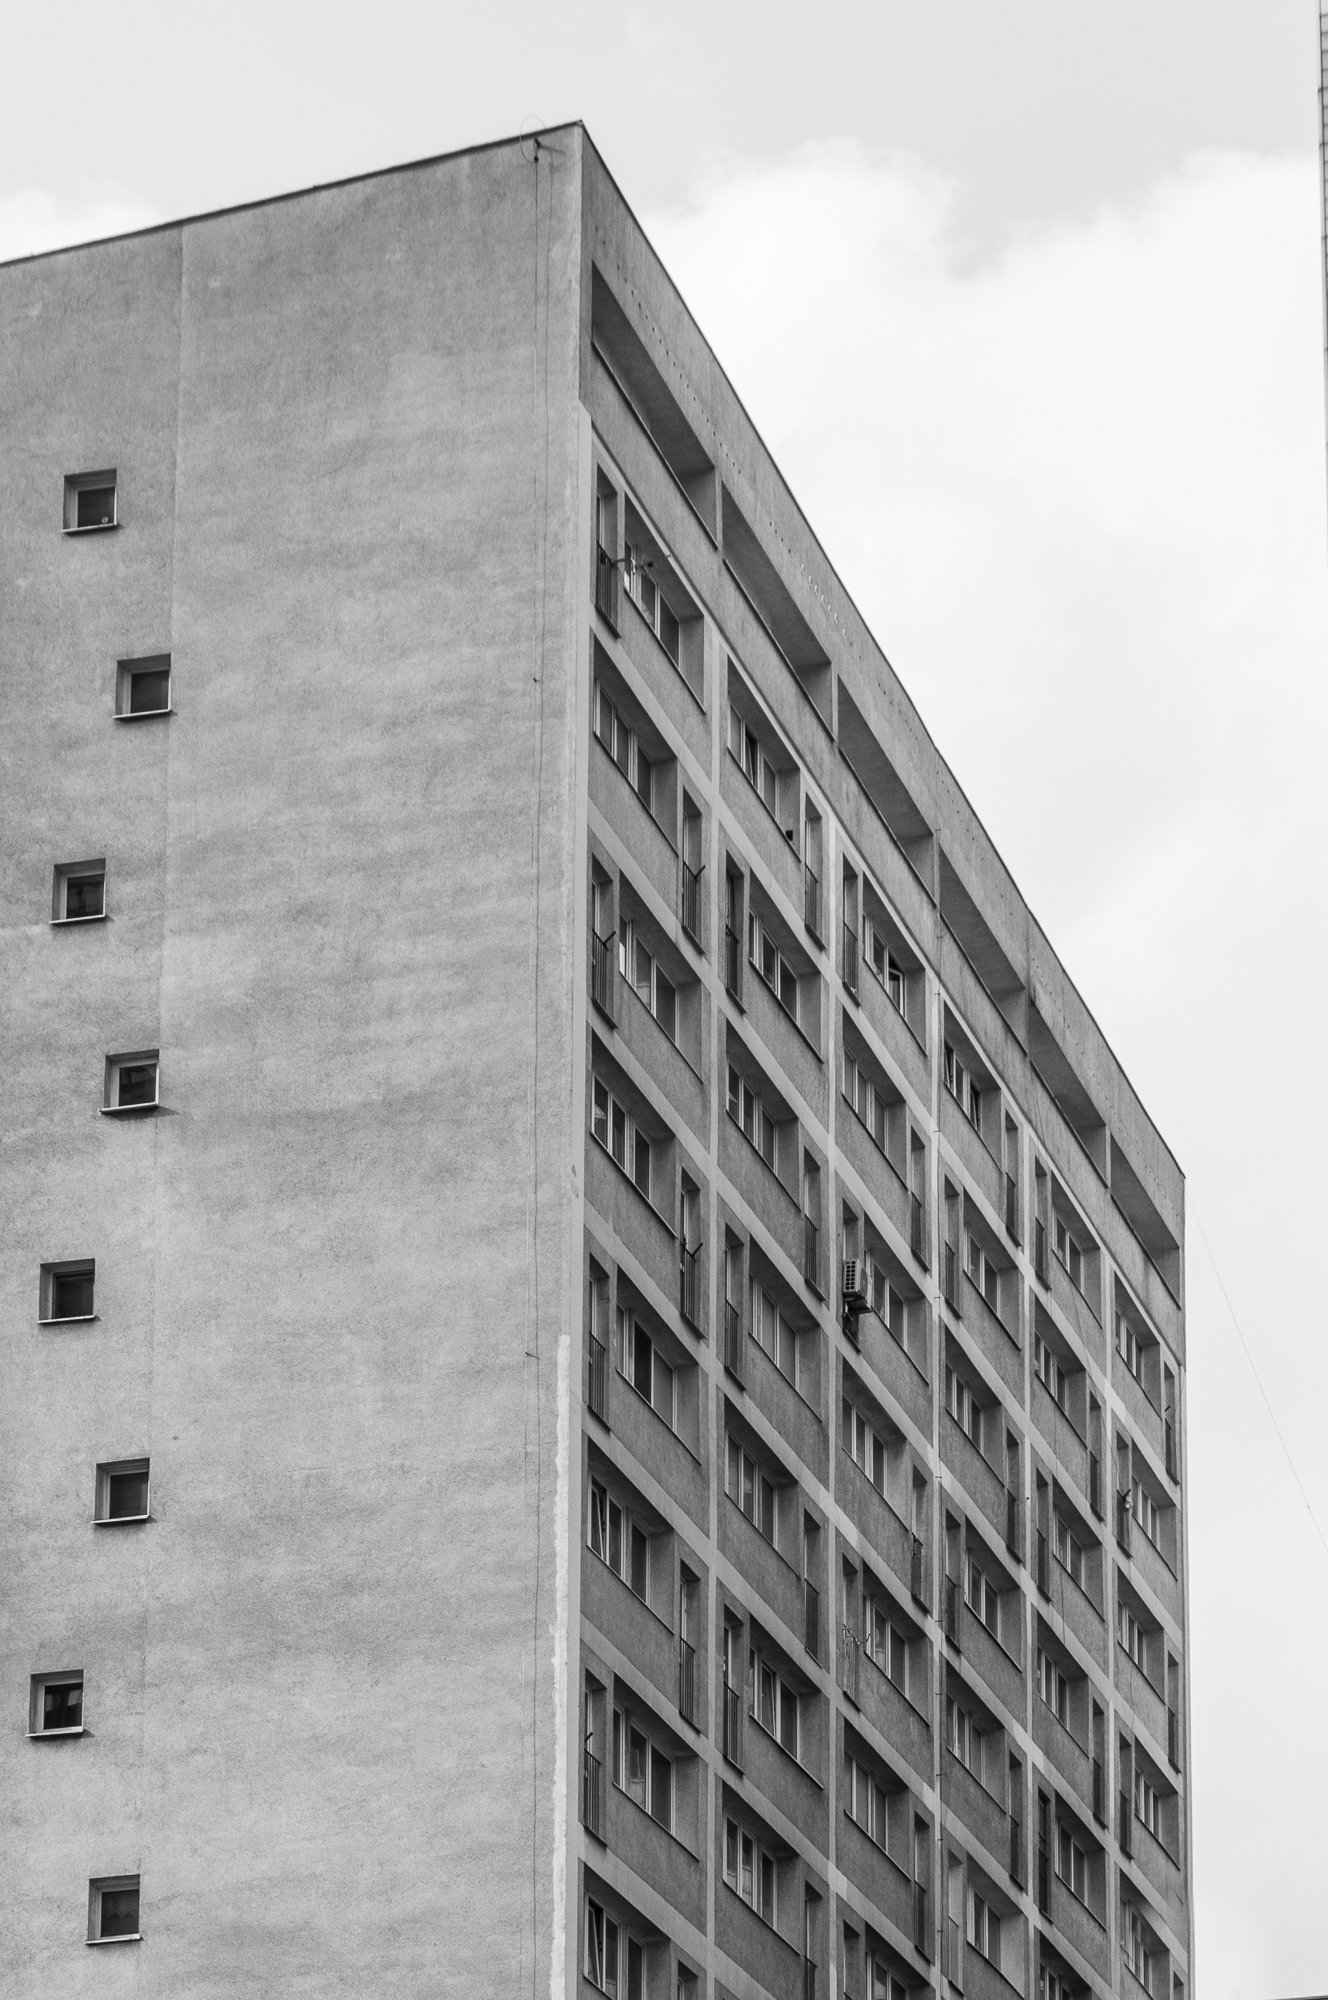 Adam Mazek Photography Warsaw (Warszawa) 2020. Post: "Social media v.s. Reality." Minimalism. Blocks of flats.